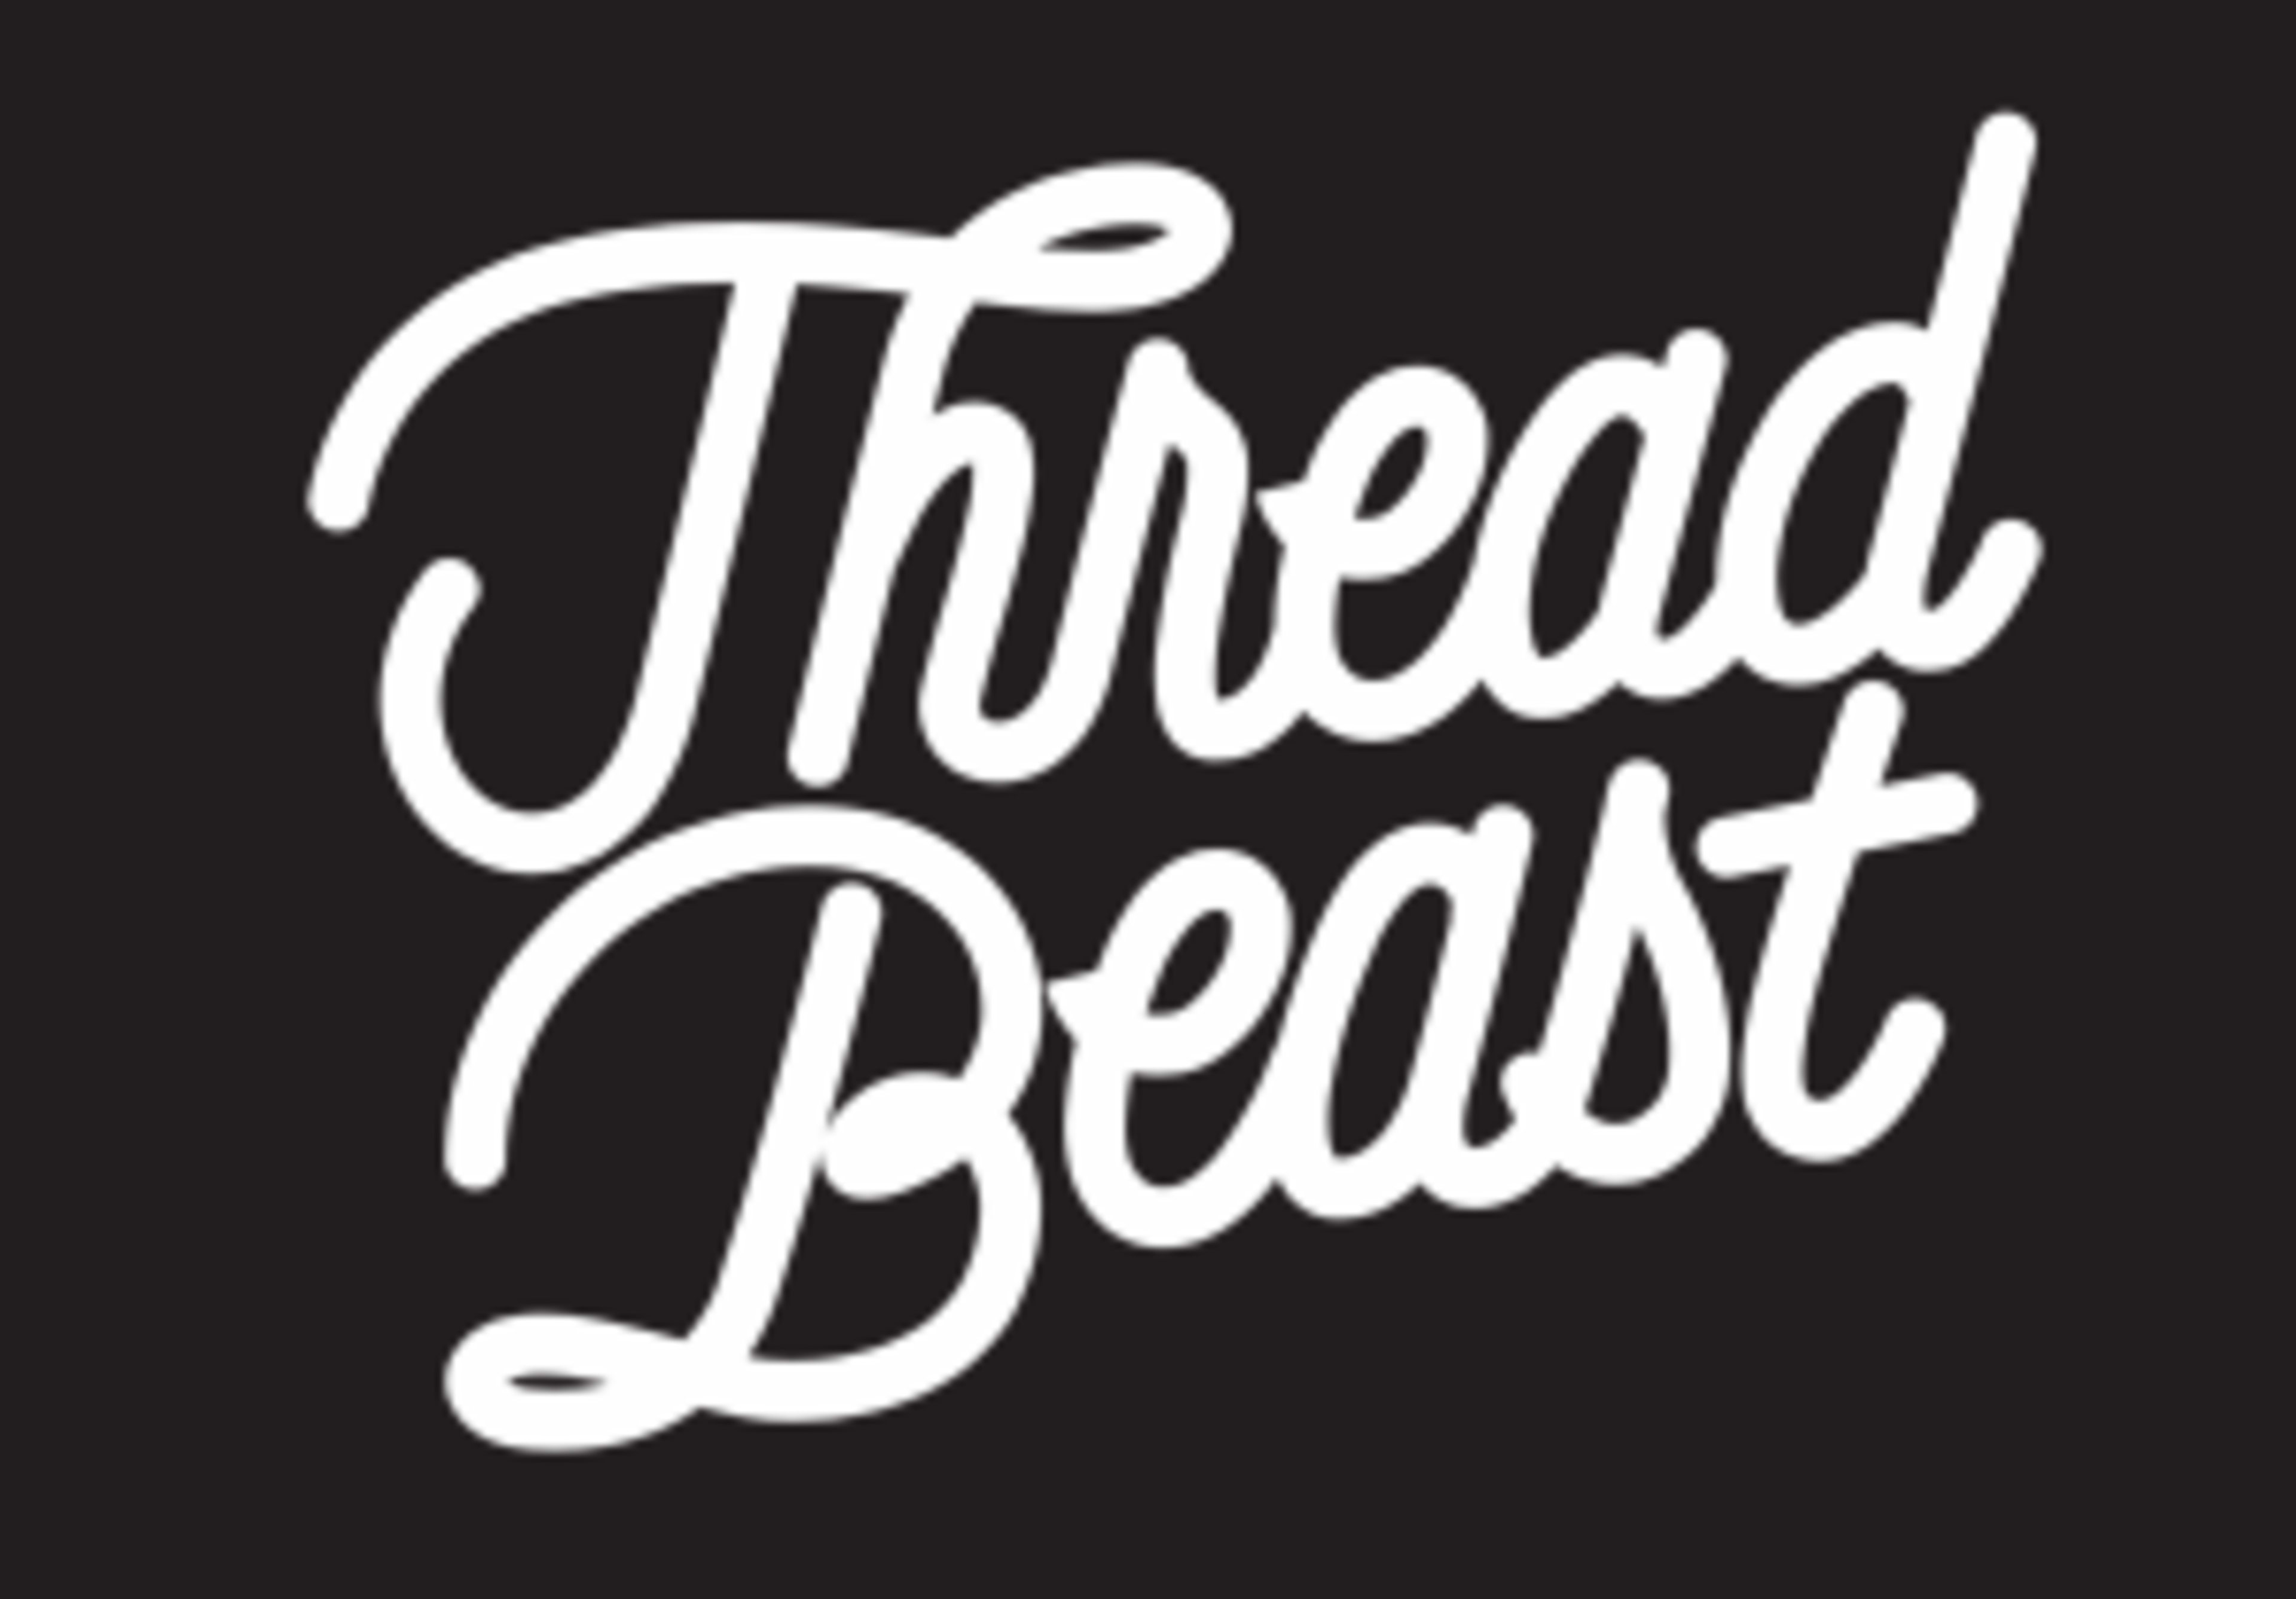 ThreadBeastCode